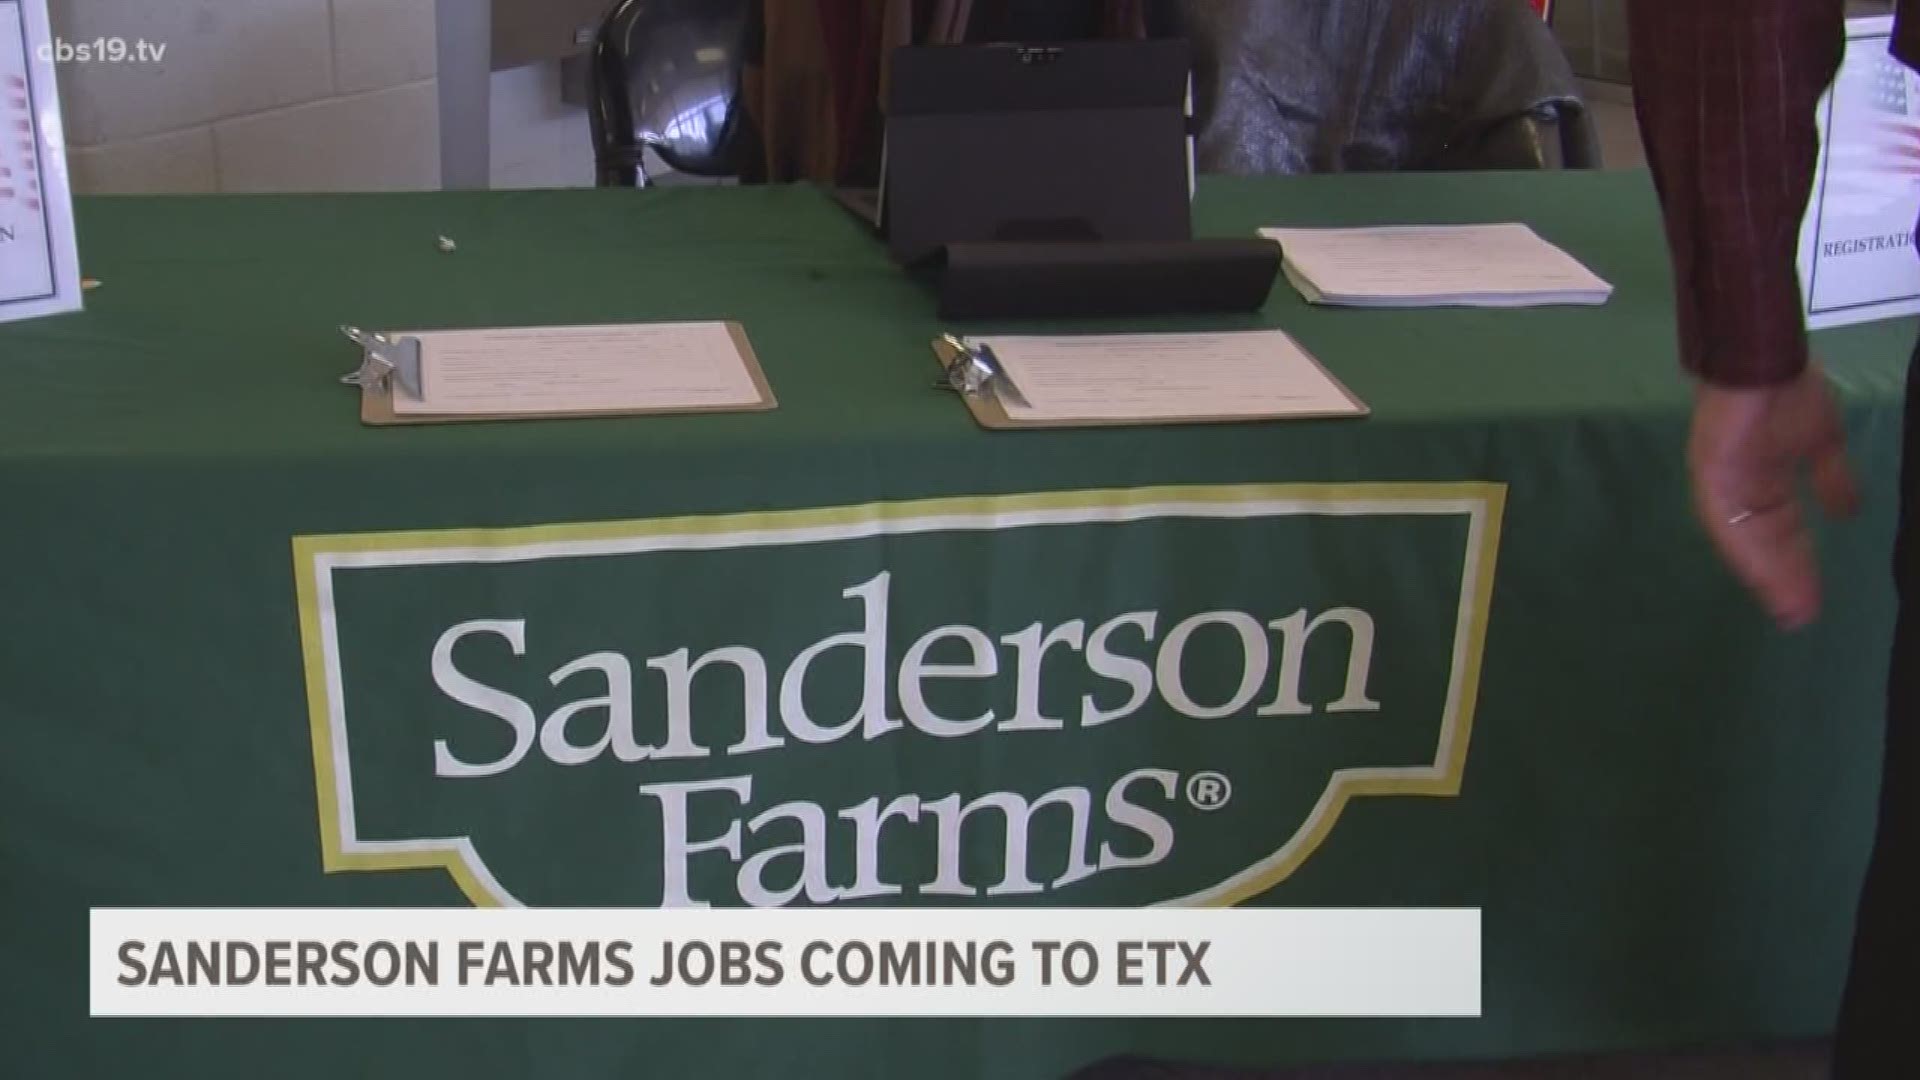 Sanderson Farms brings 1,600 to ETX. 